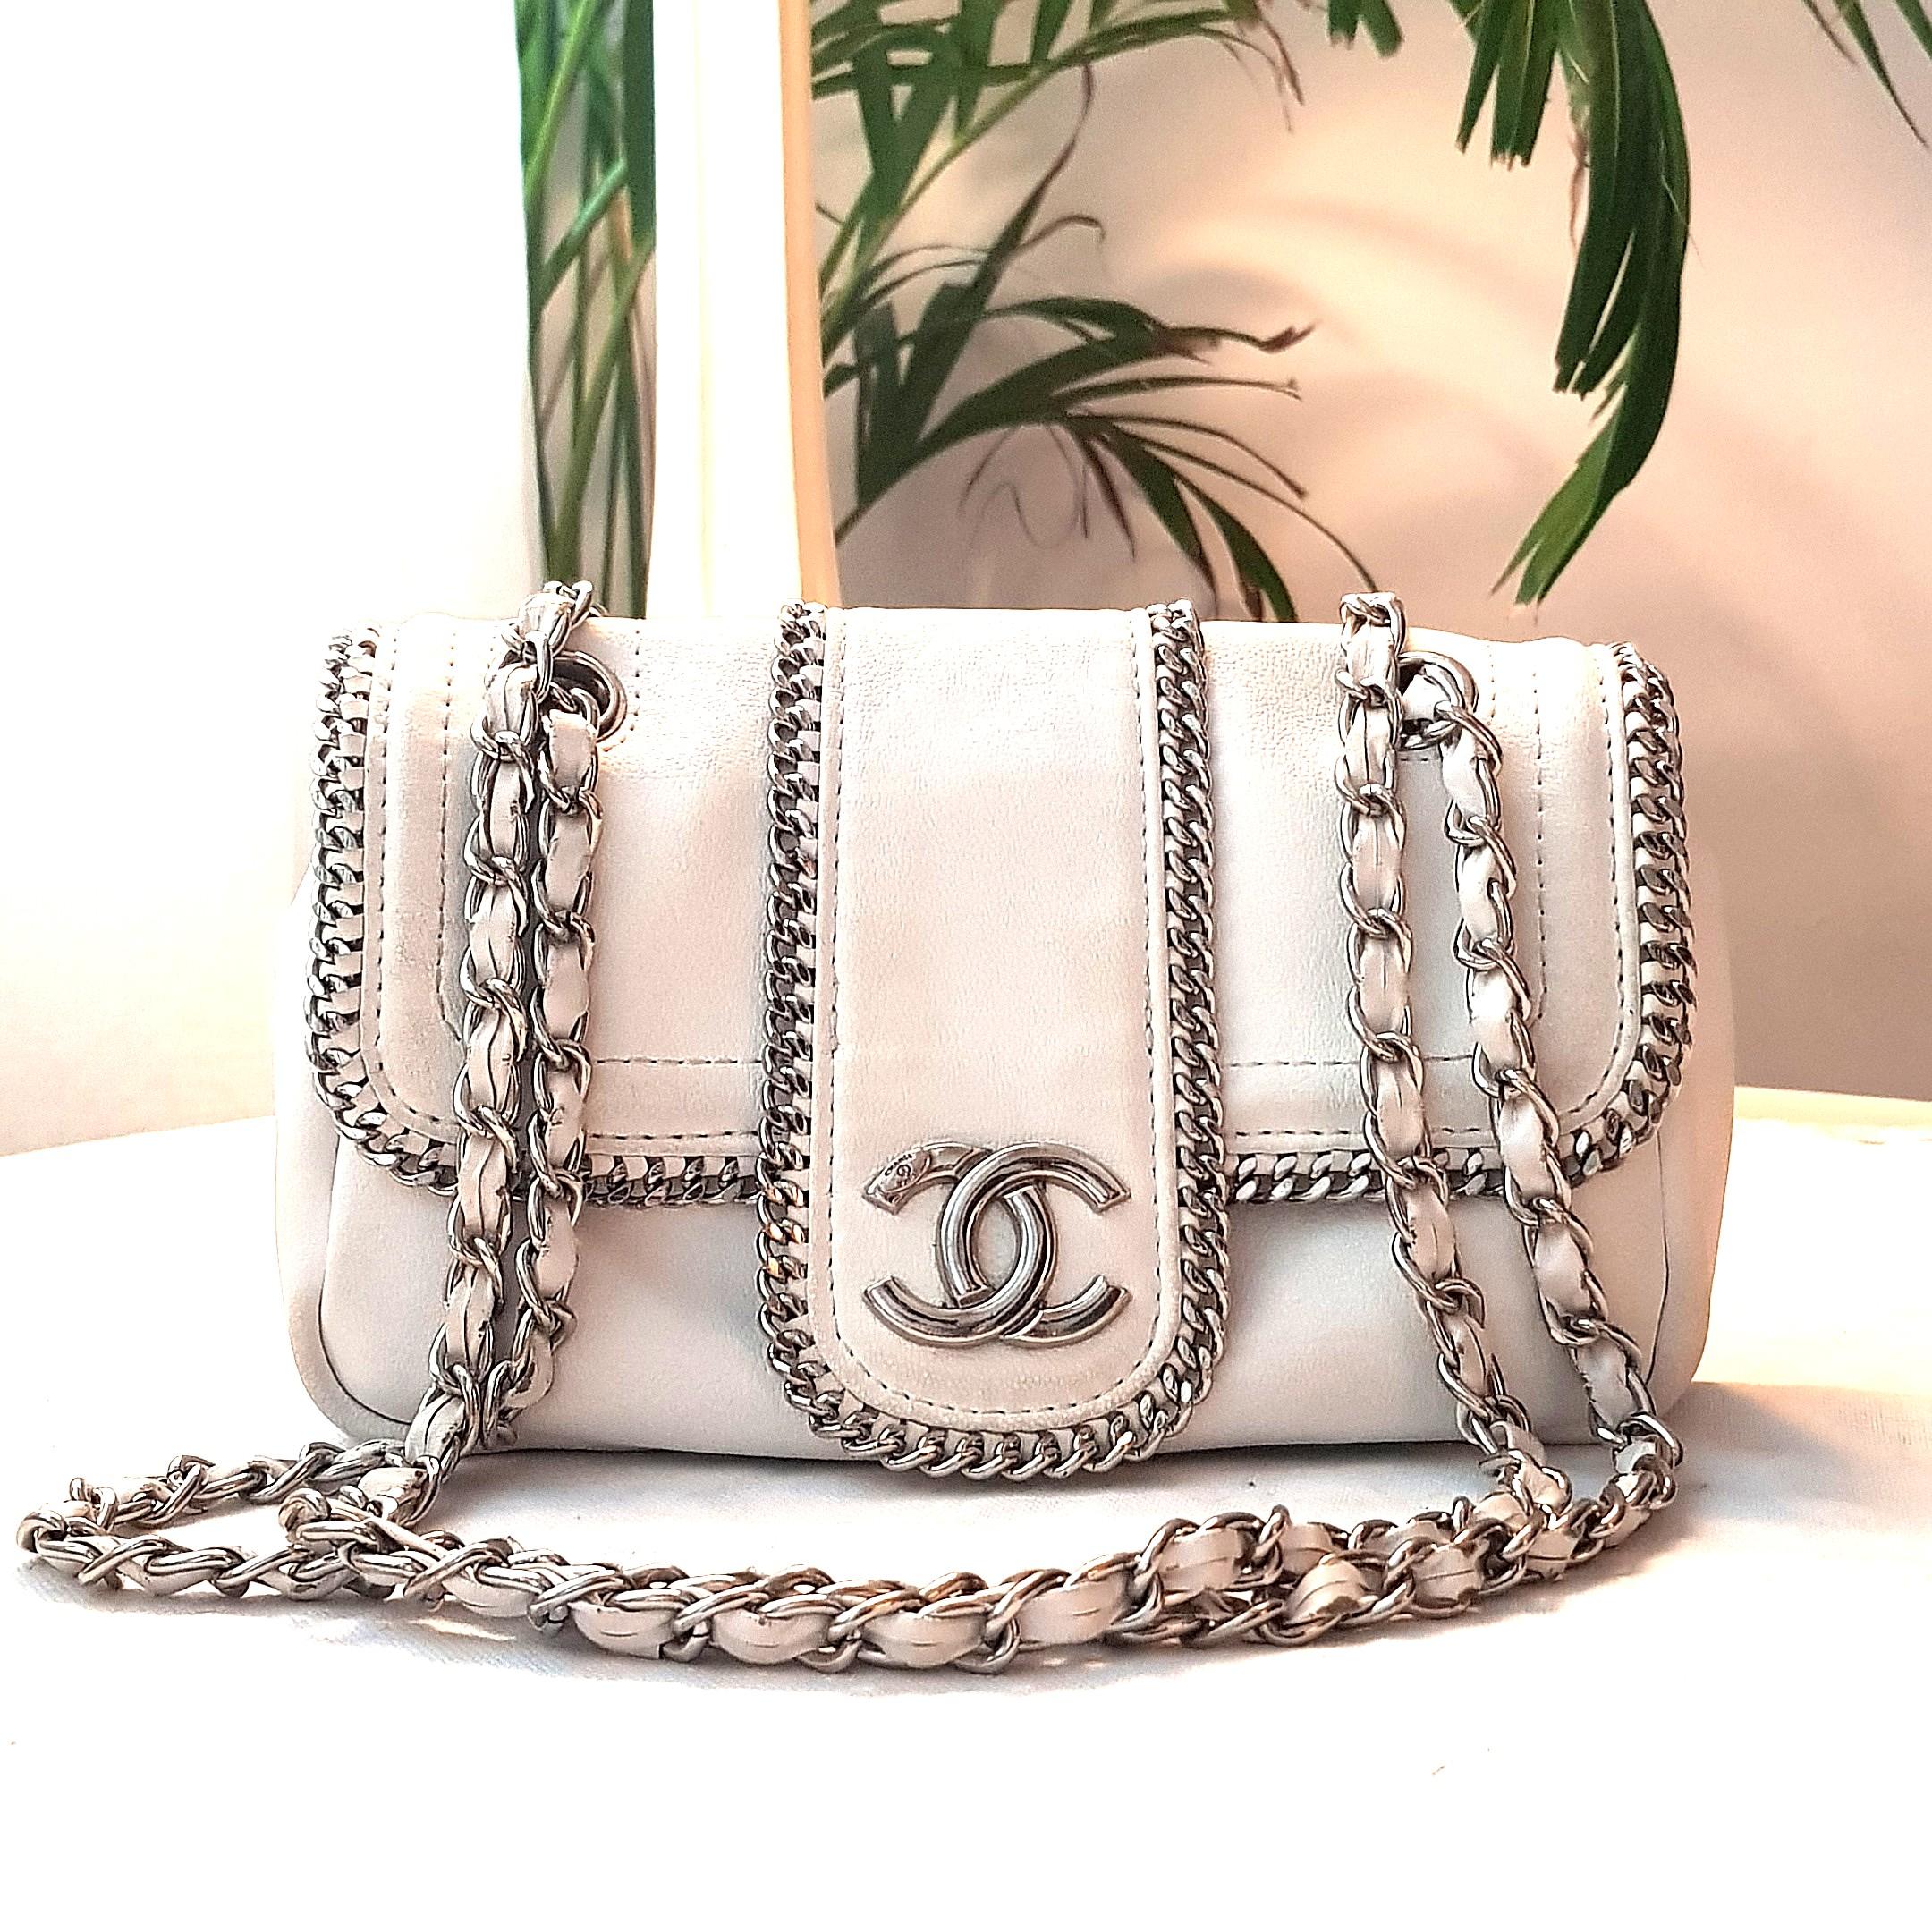 Chanel Mini Madison Flap Bag